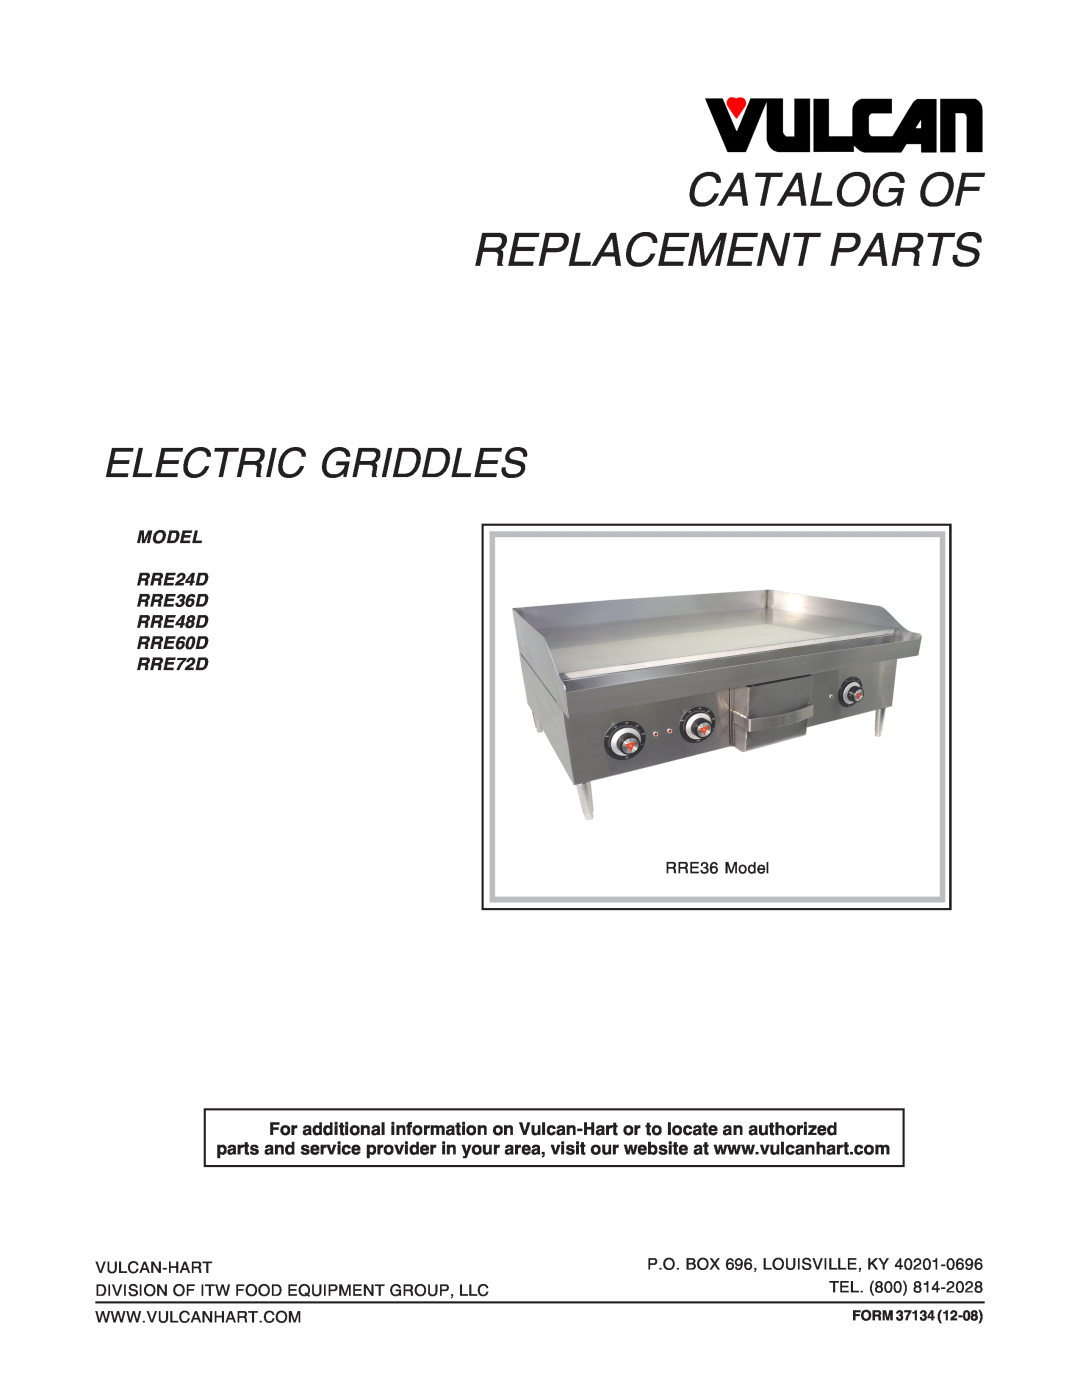 Vulcan-Hart manual Catalog Of Replacement Parts, Electric Griddles, MODEL RRE24D RRE36D RRE48D RRE60D RRE72D 